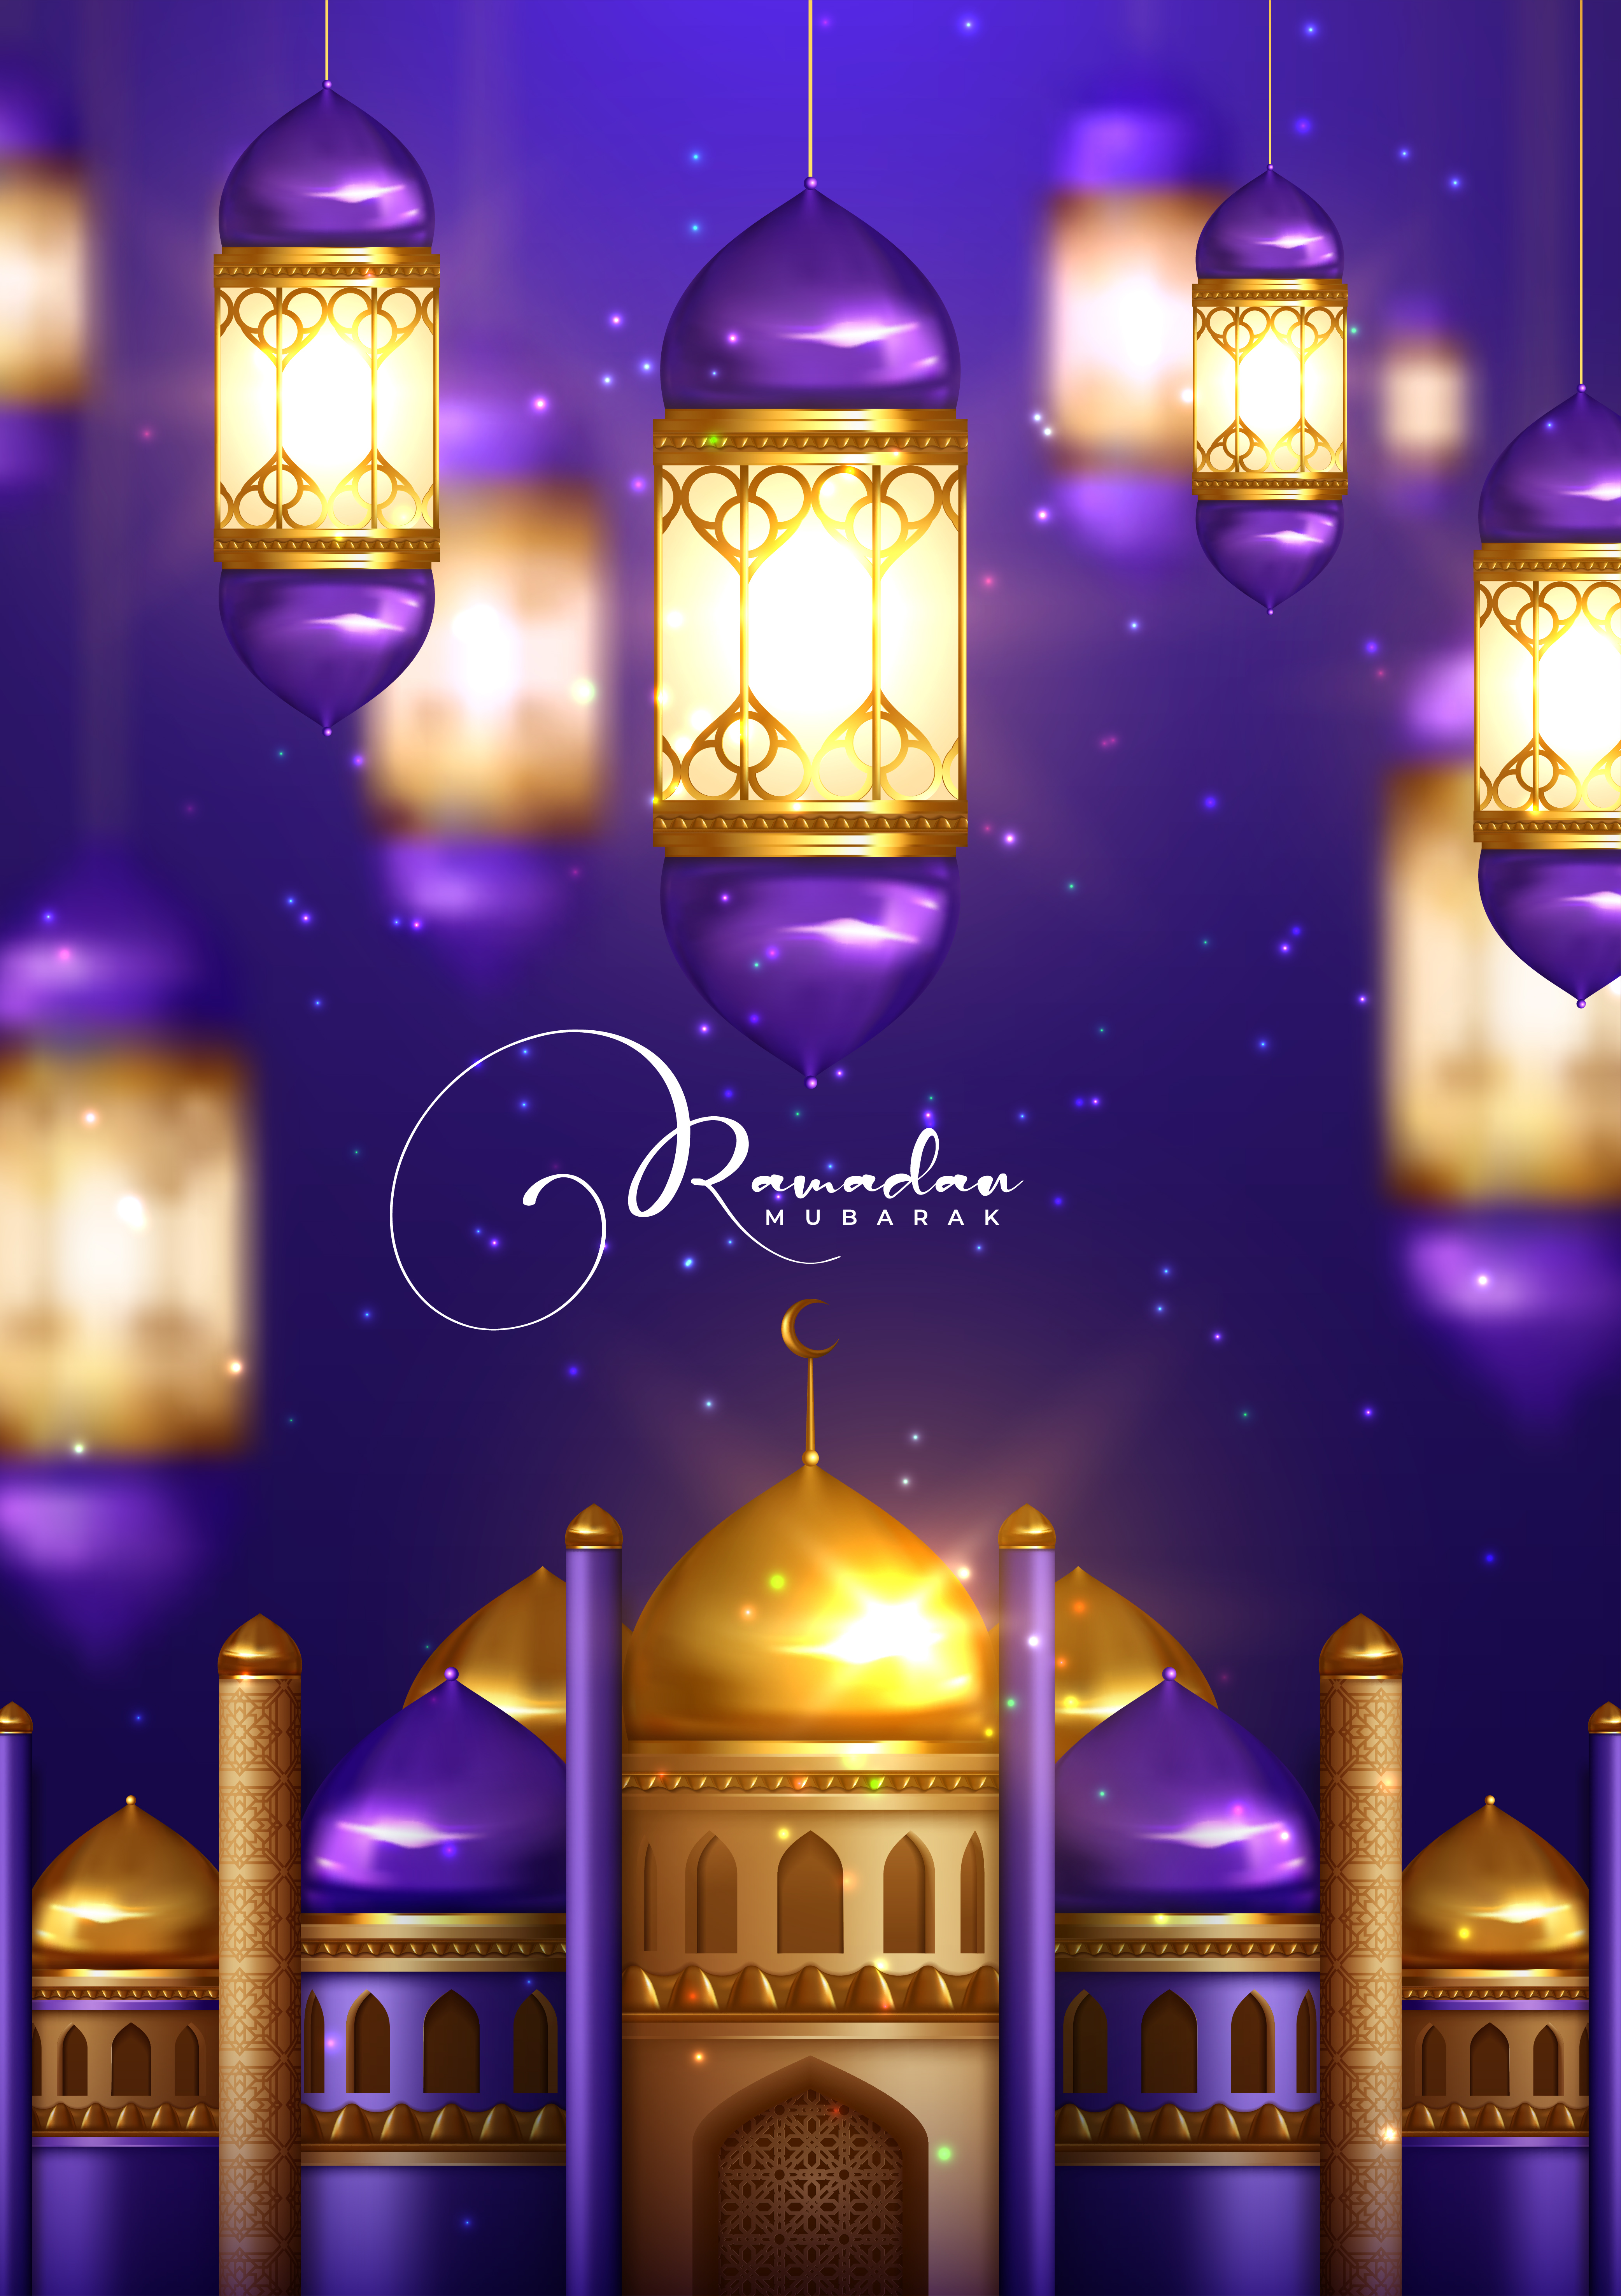 Ramadan Kareem Design with Glowing Lanterns - Download Free Vectors